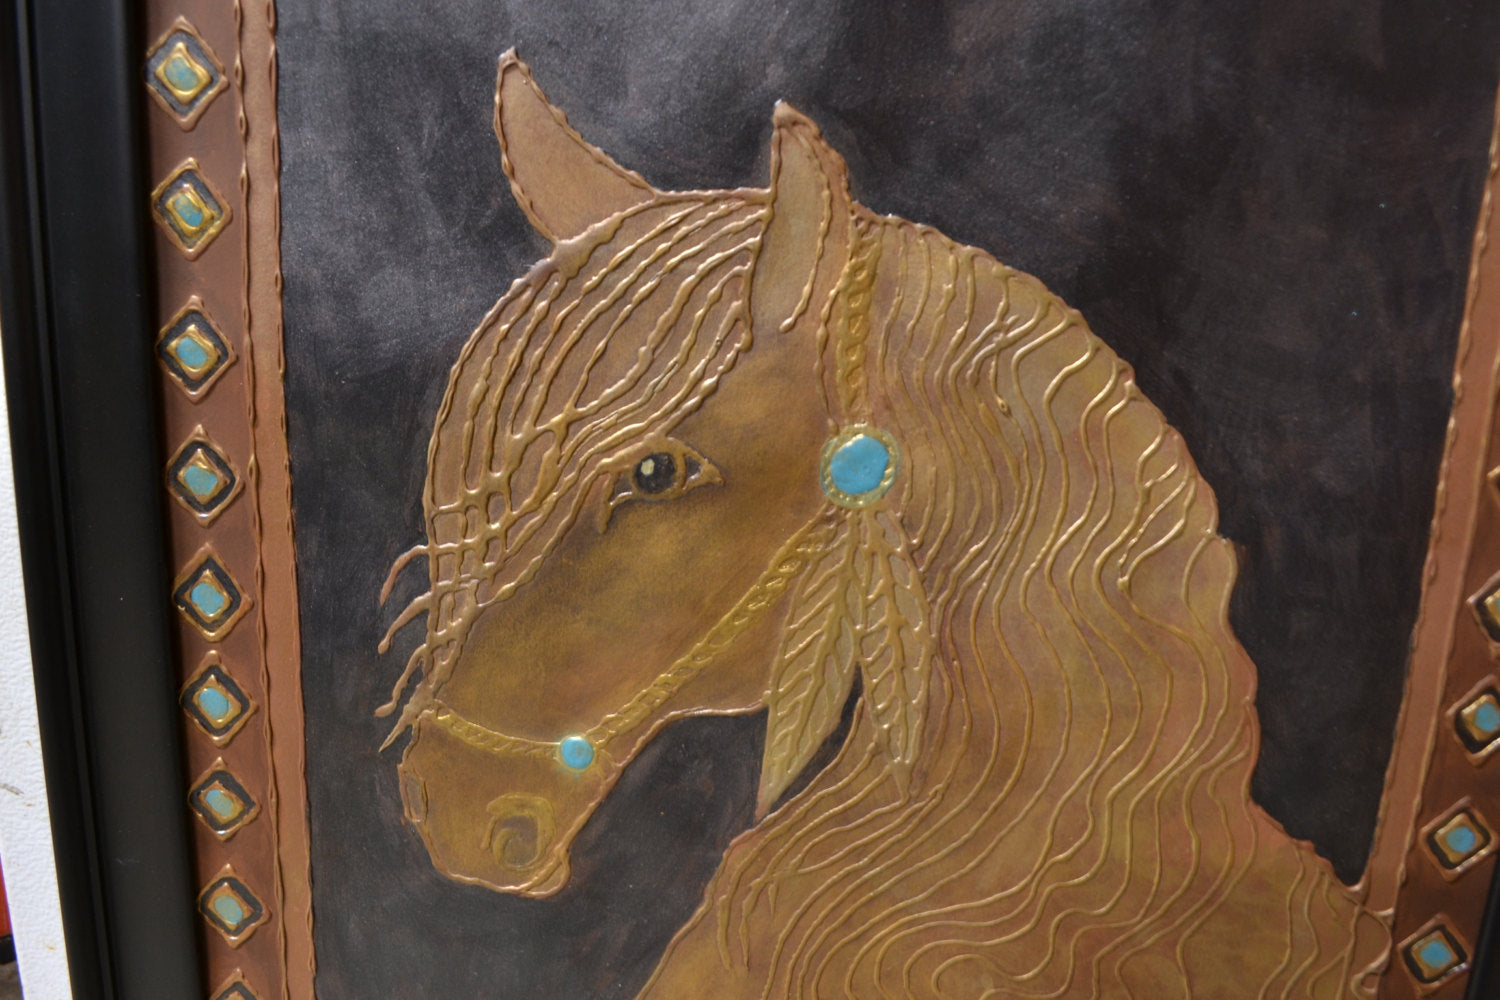 Southwestern Horse Painting- Horse Painting-Original Horse Painting-Framed Horse Painting